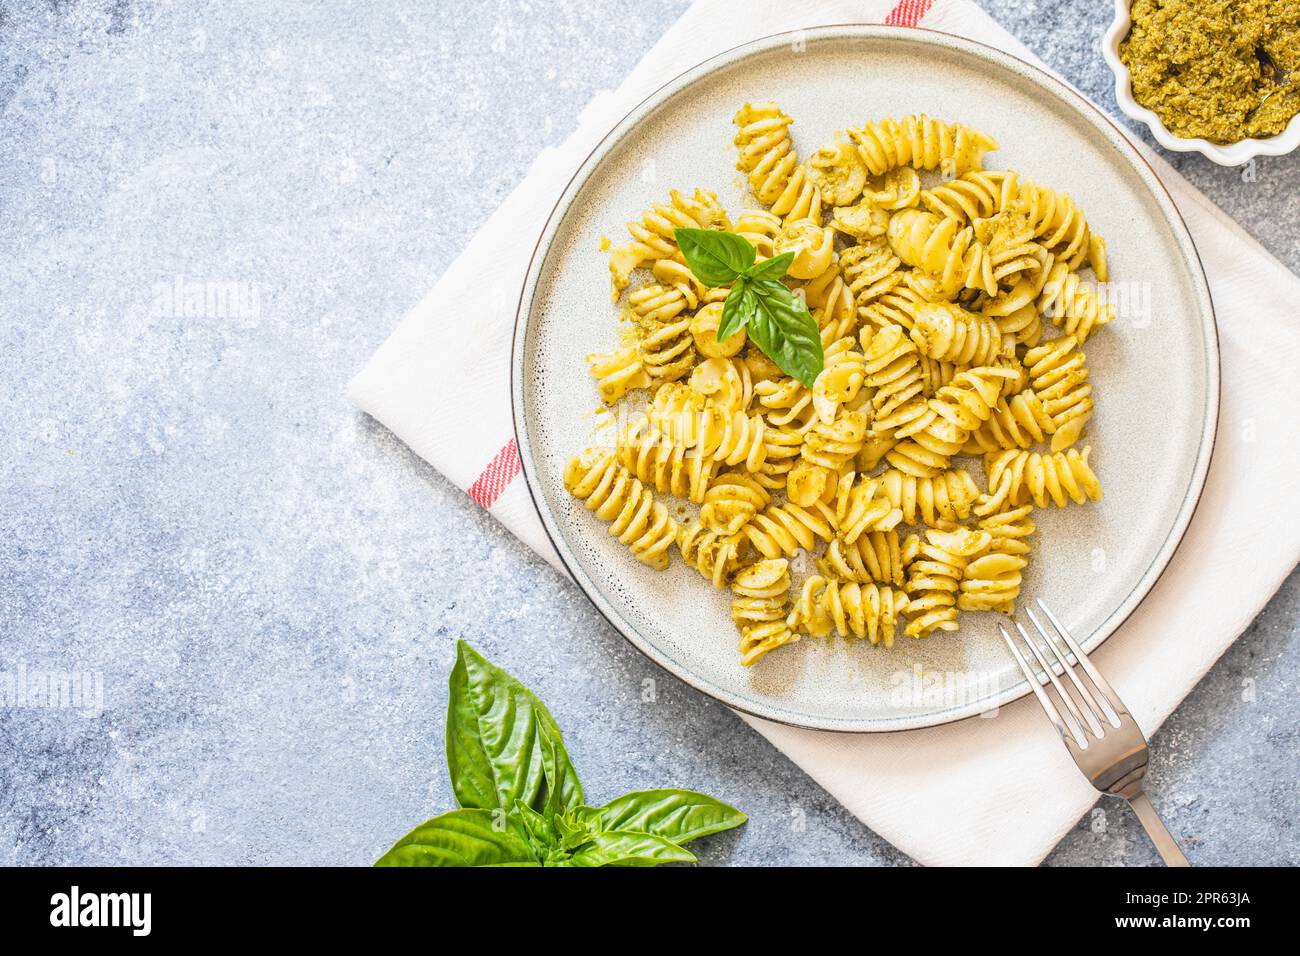 fusili pasta with basil pesto and herbs, italian cuisine, gray stone background. Home made food. Stock Photo